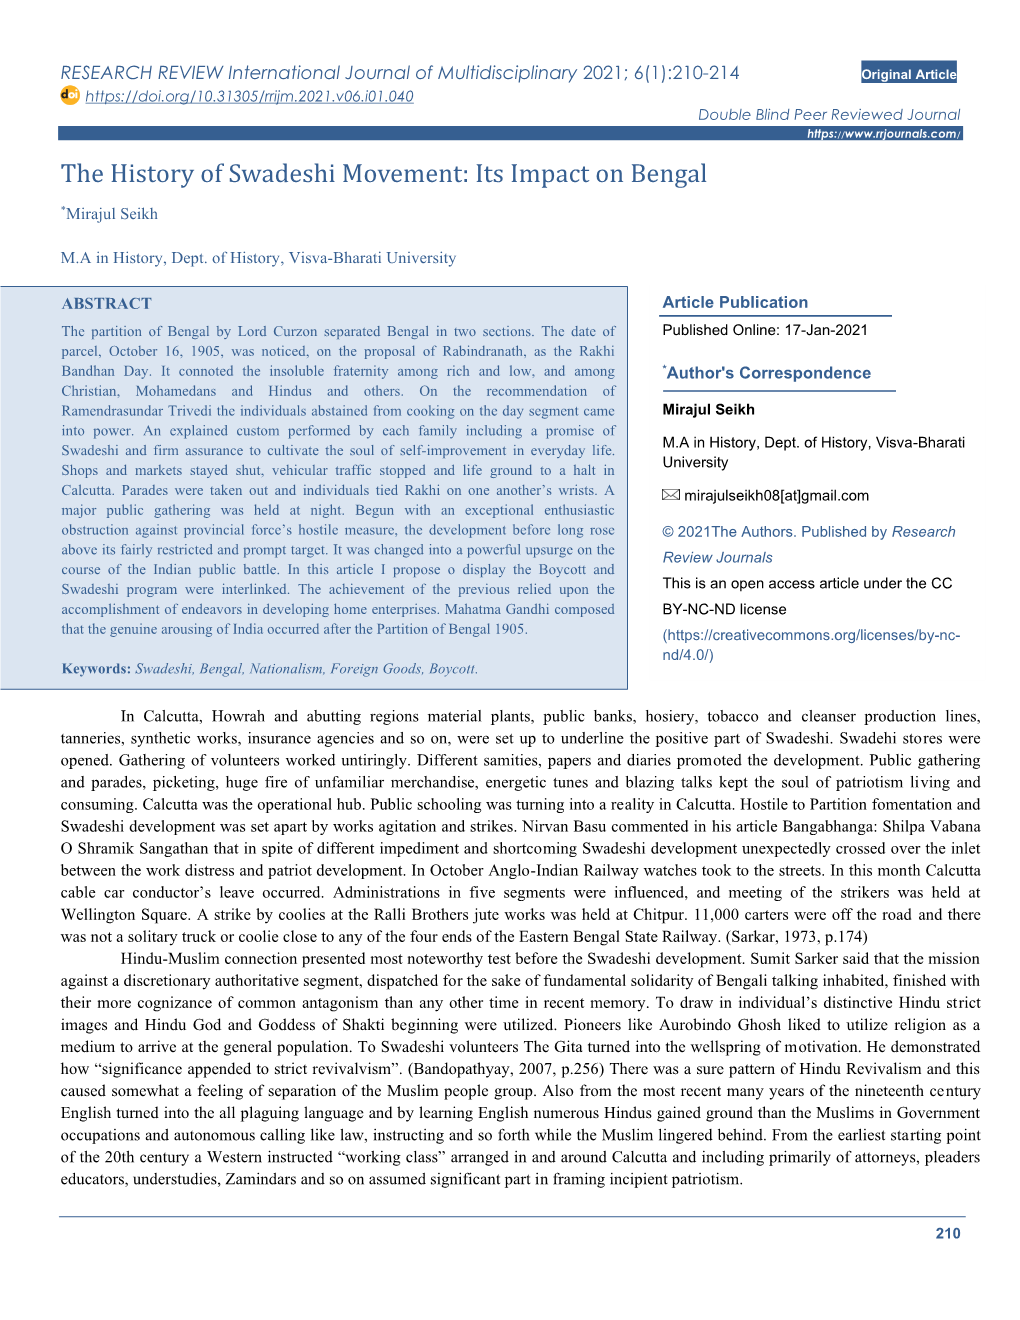 The History of Swadeshi Movement: Its Impact on Bengal